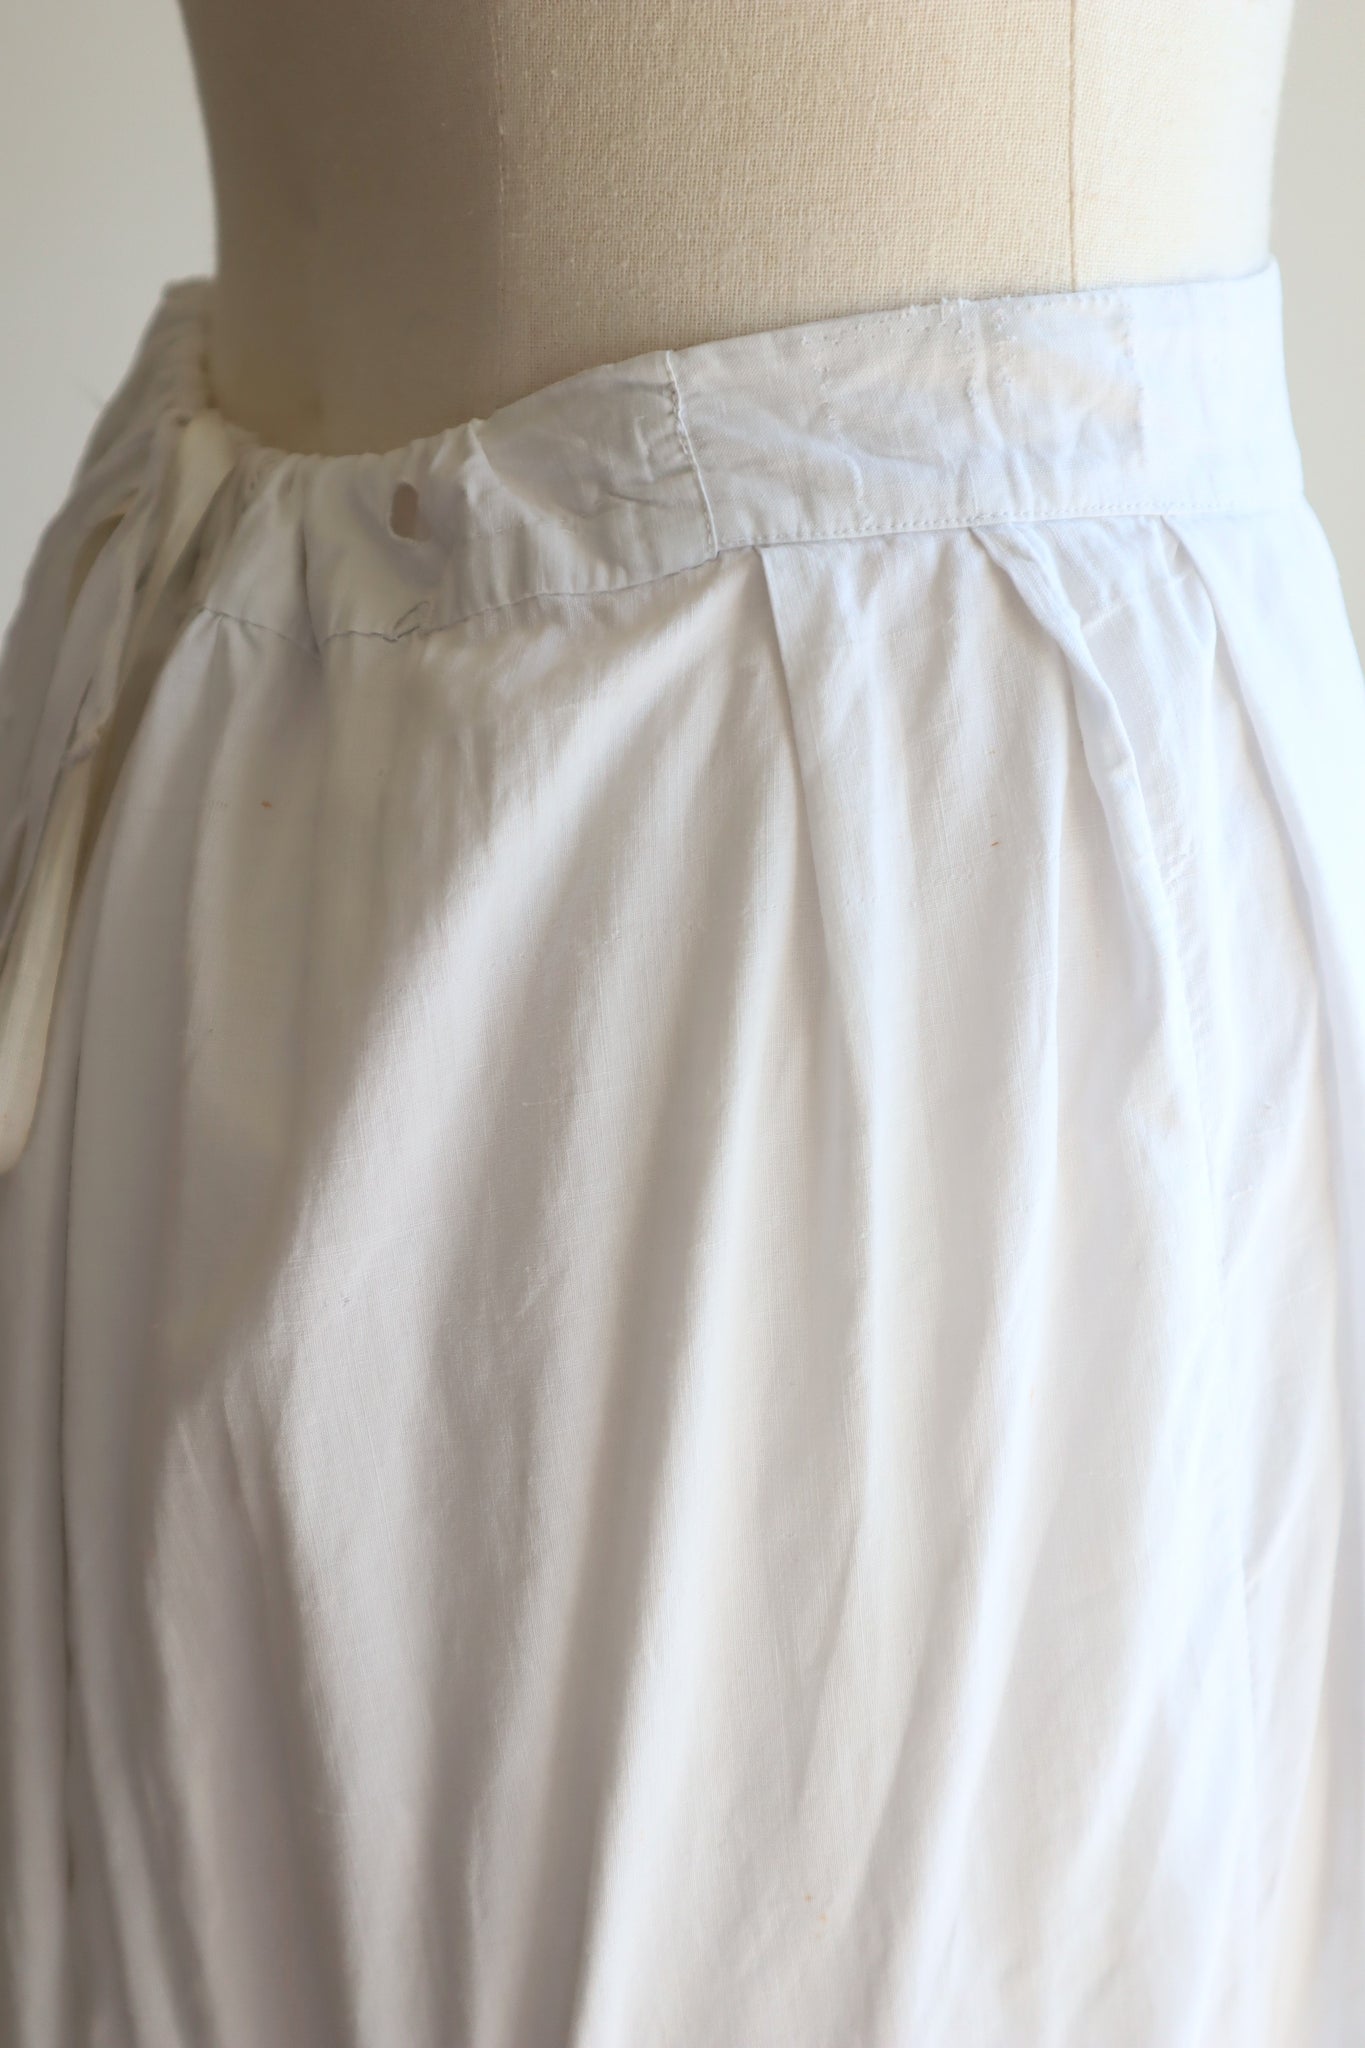 1900s Cut Work Bustle Petticoat Skirt